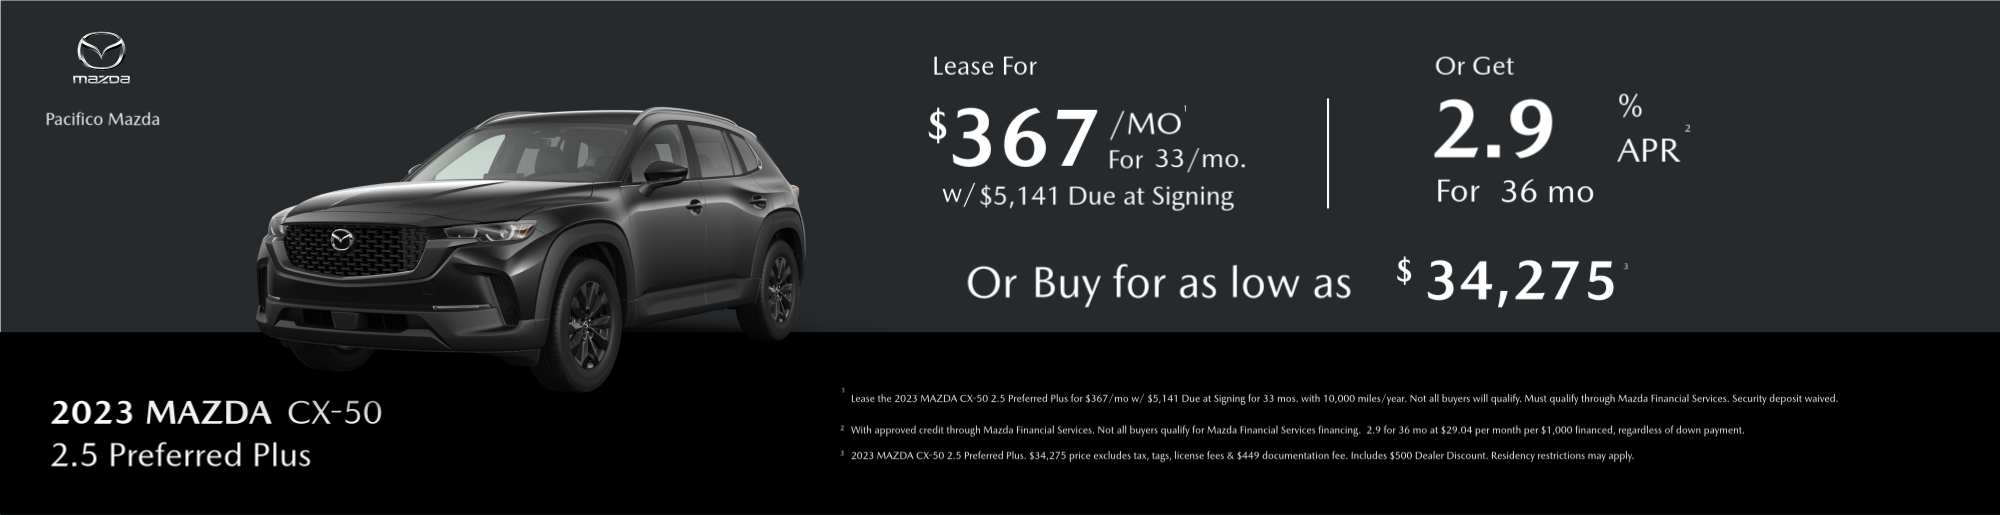 2023 Mazda CX-50 Special Offer